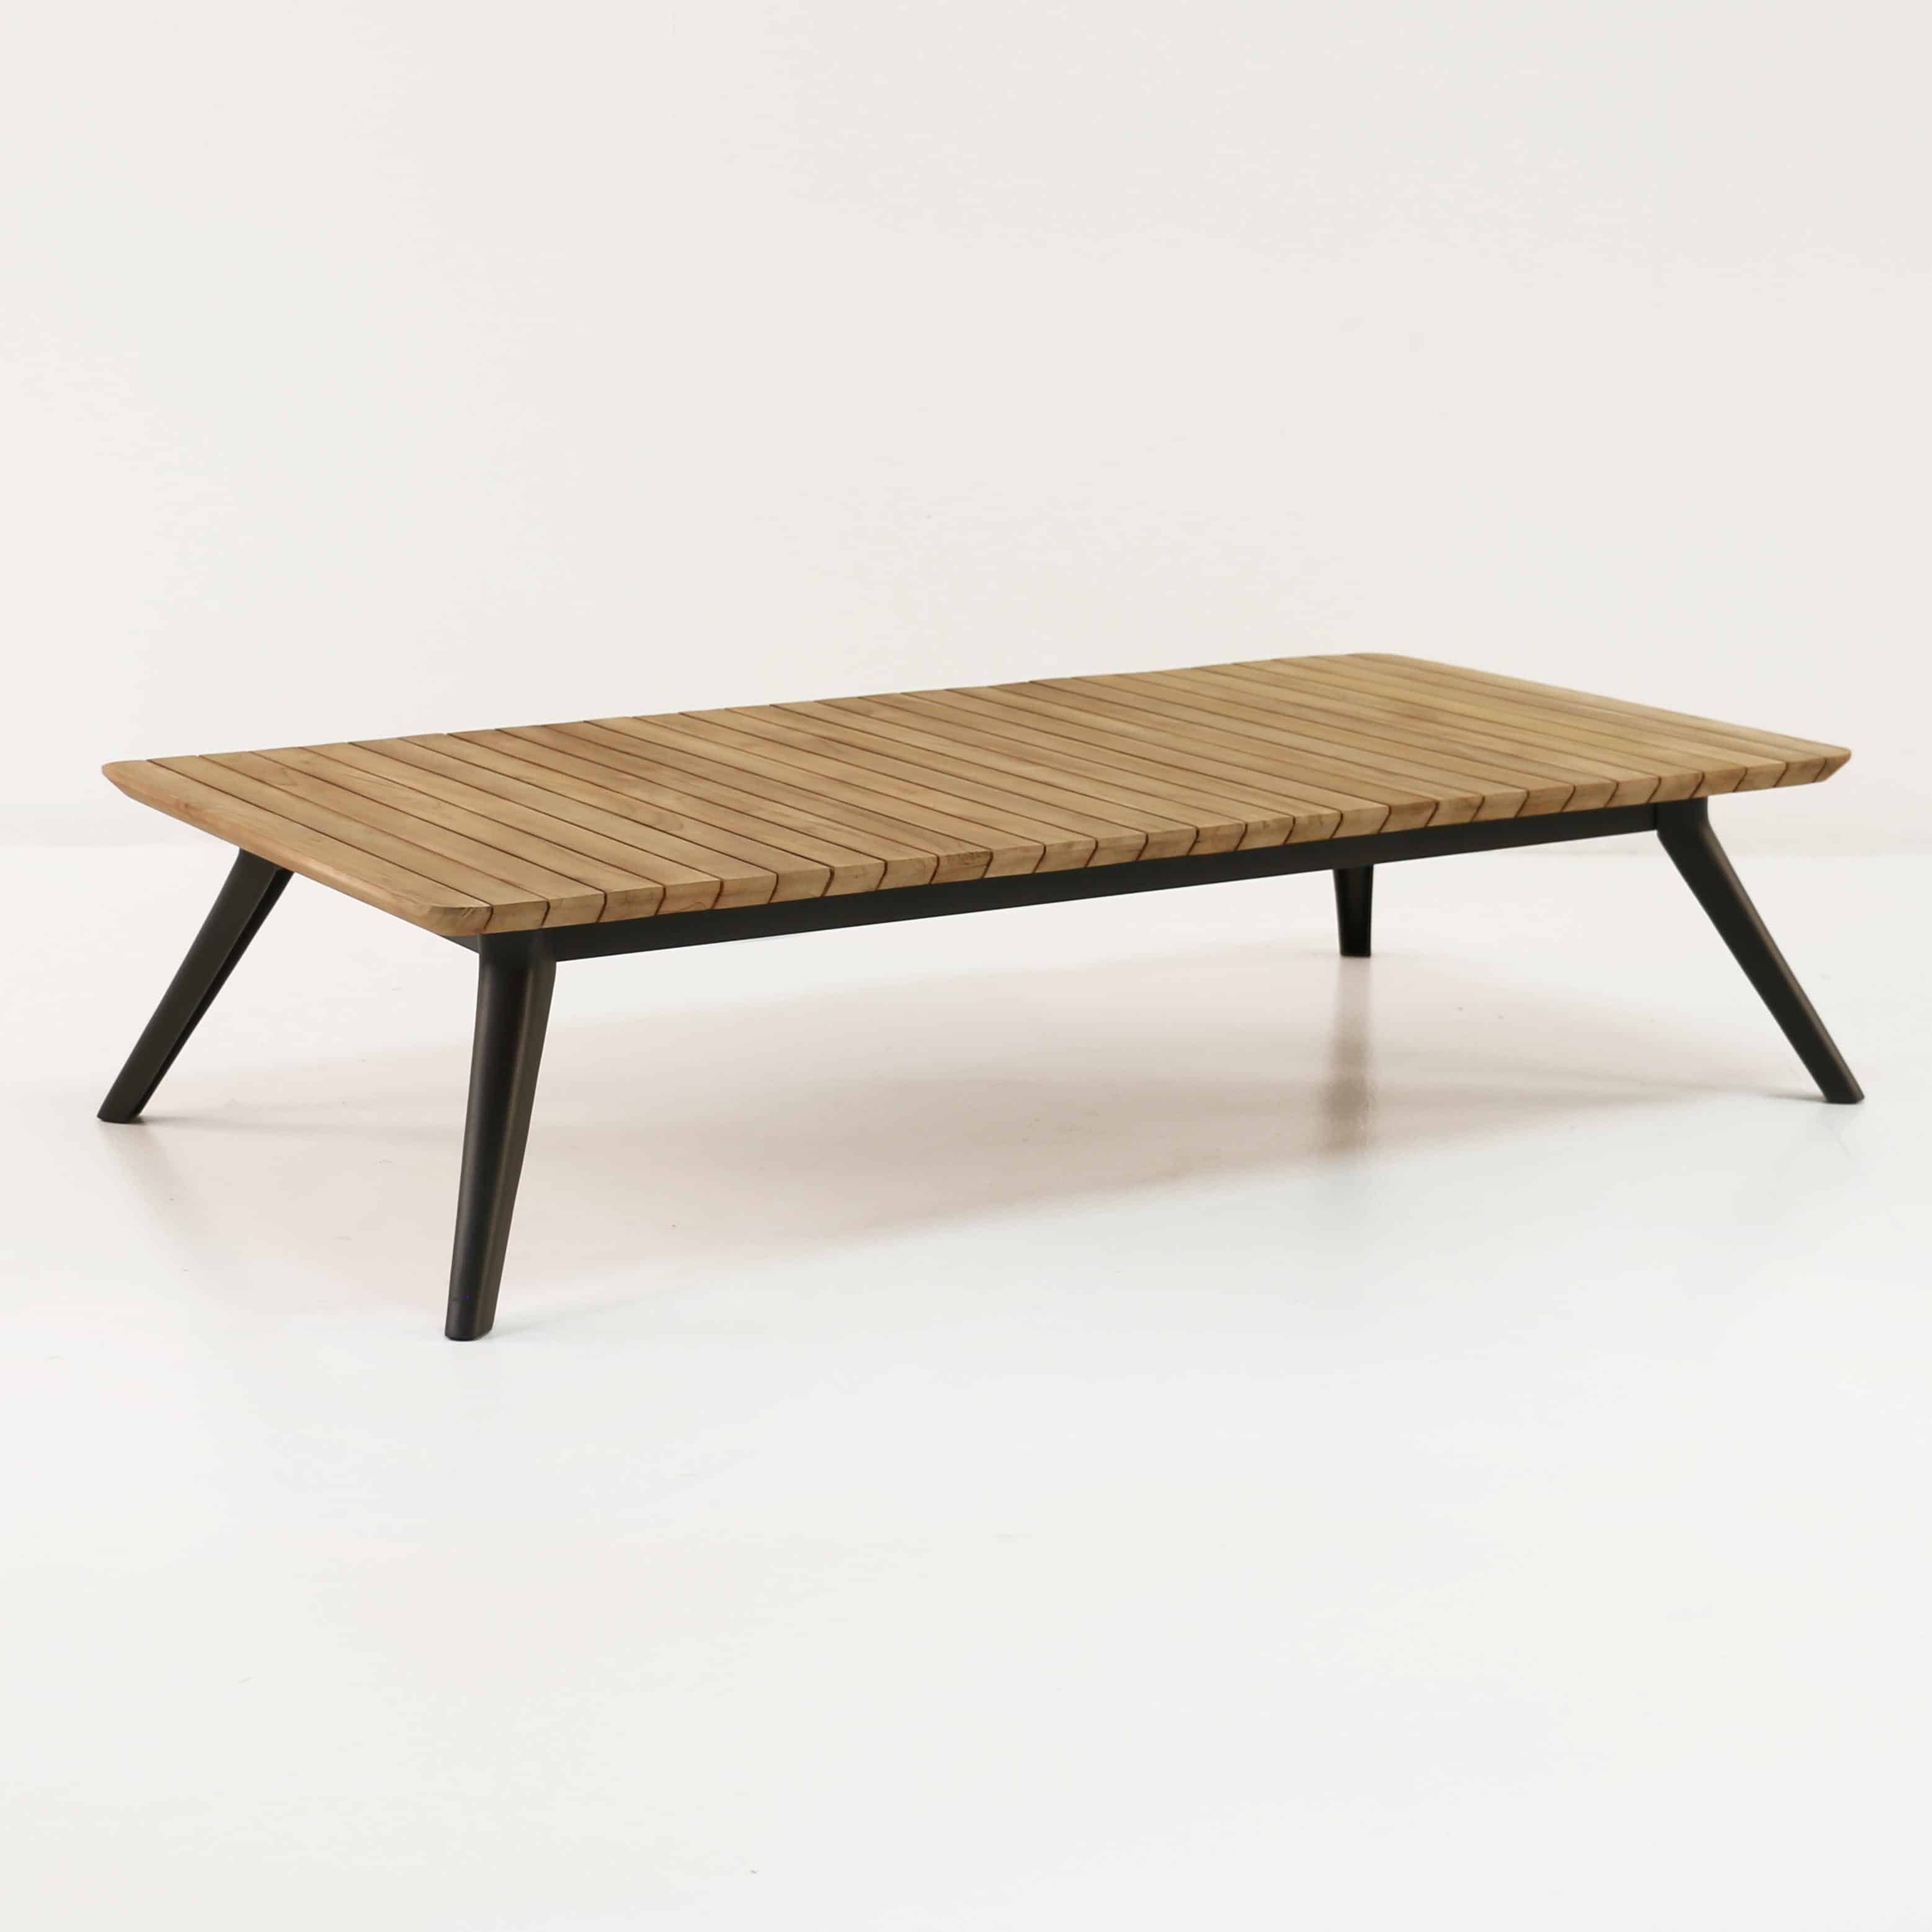 Platform Reclaimed Teak Coffee Table | Outdoor Furniture ...